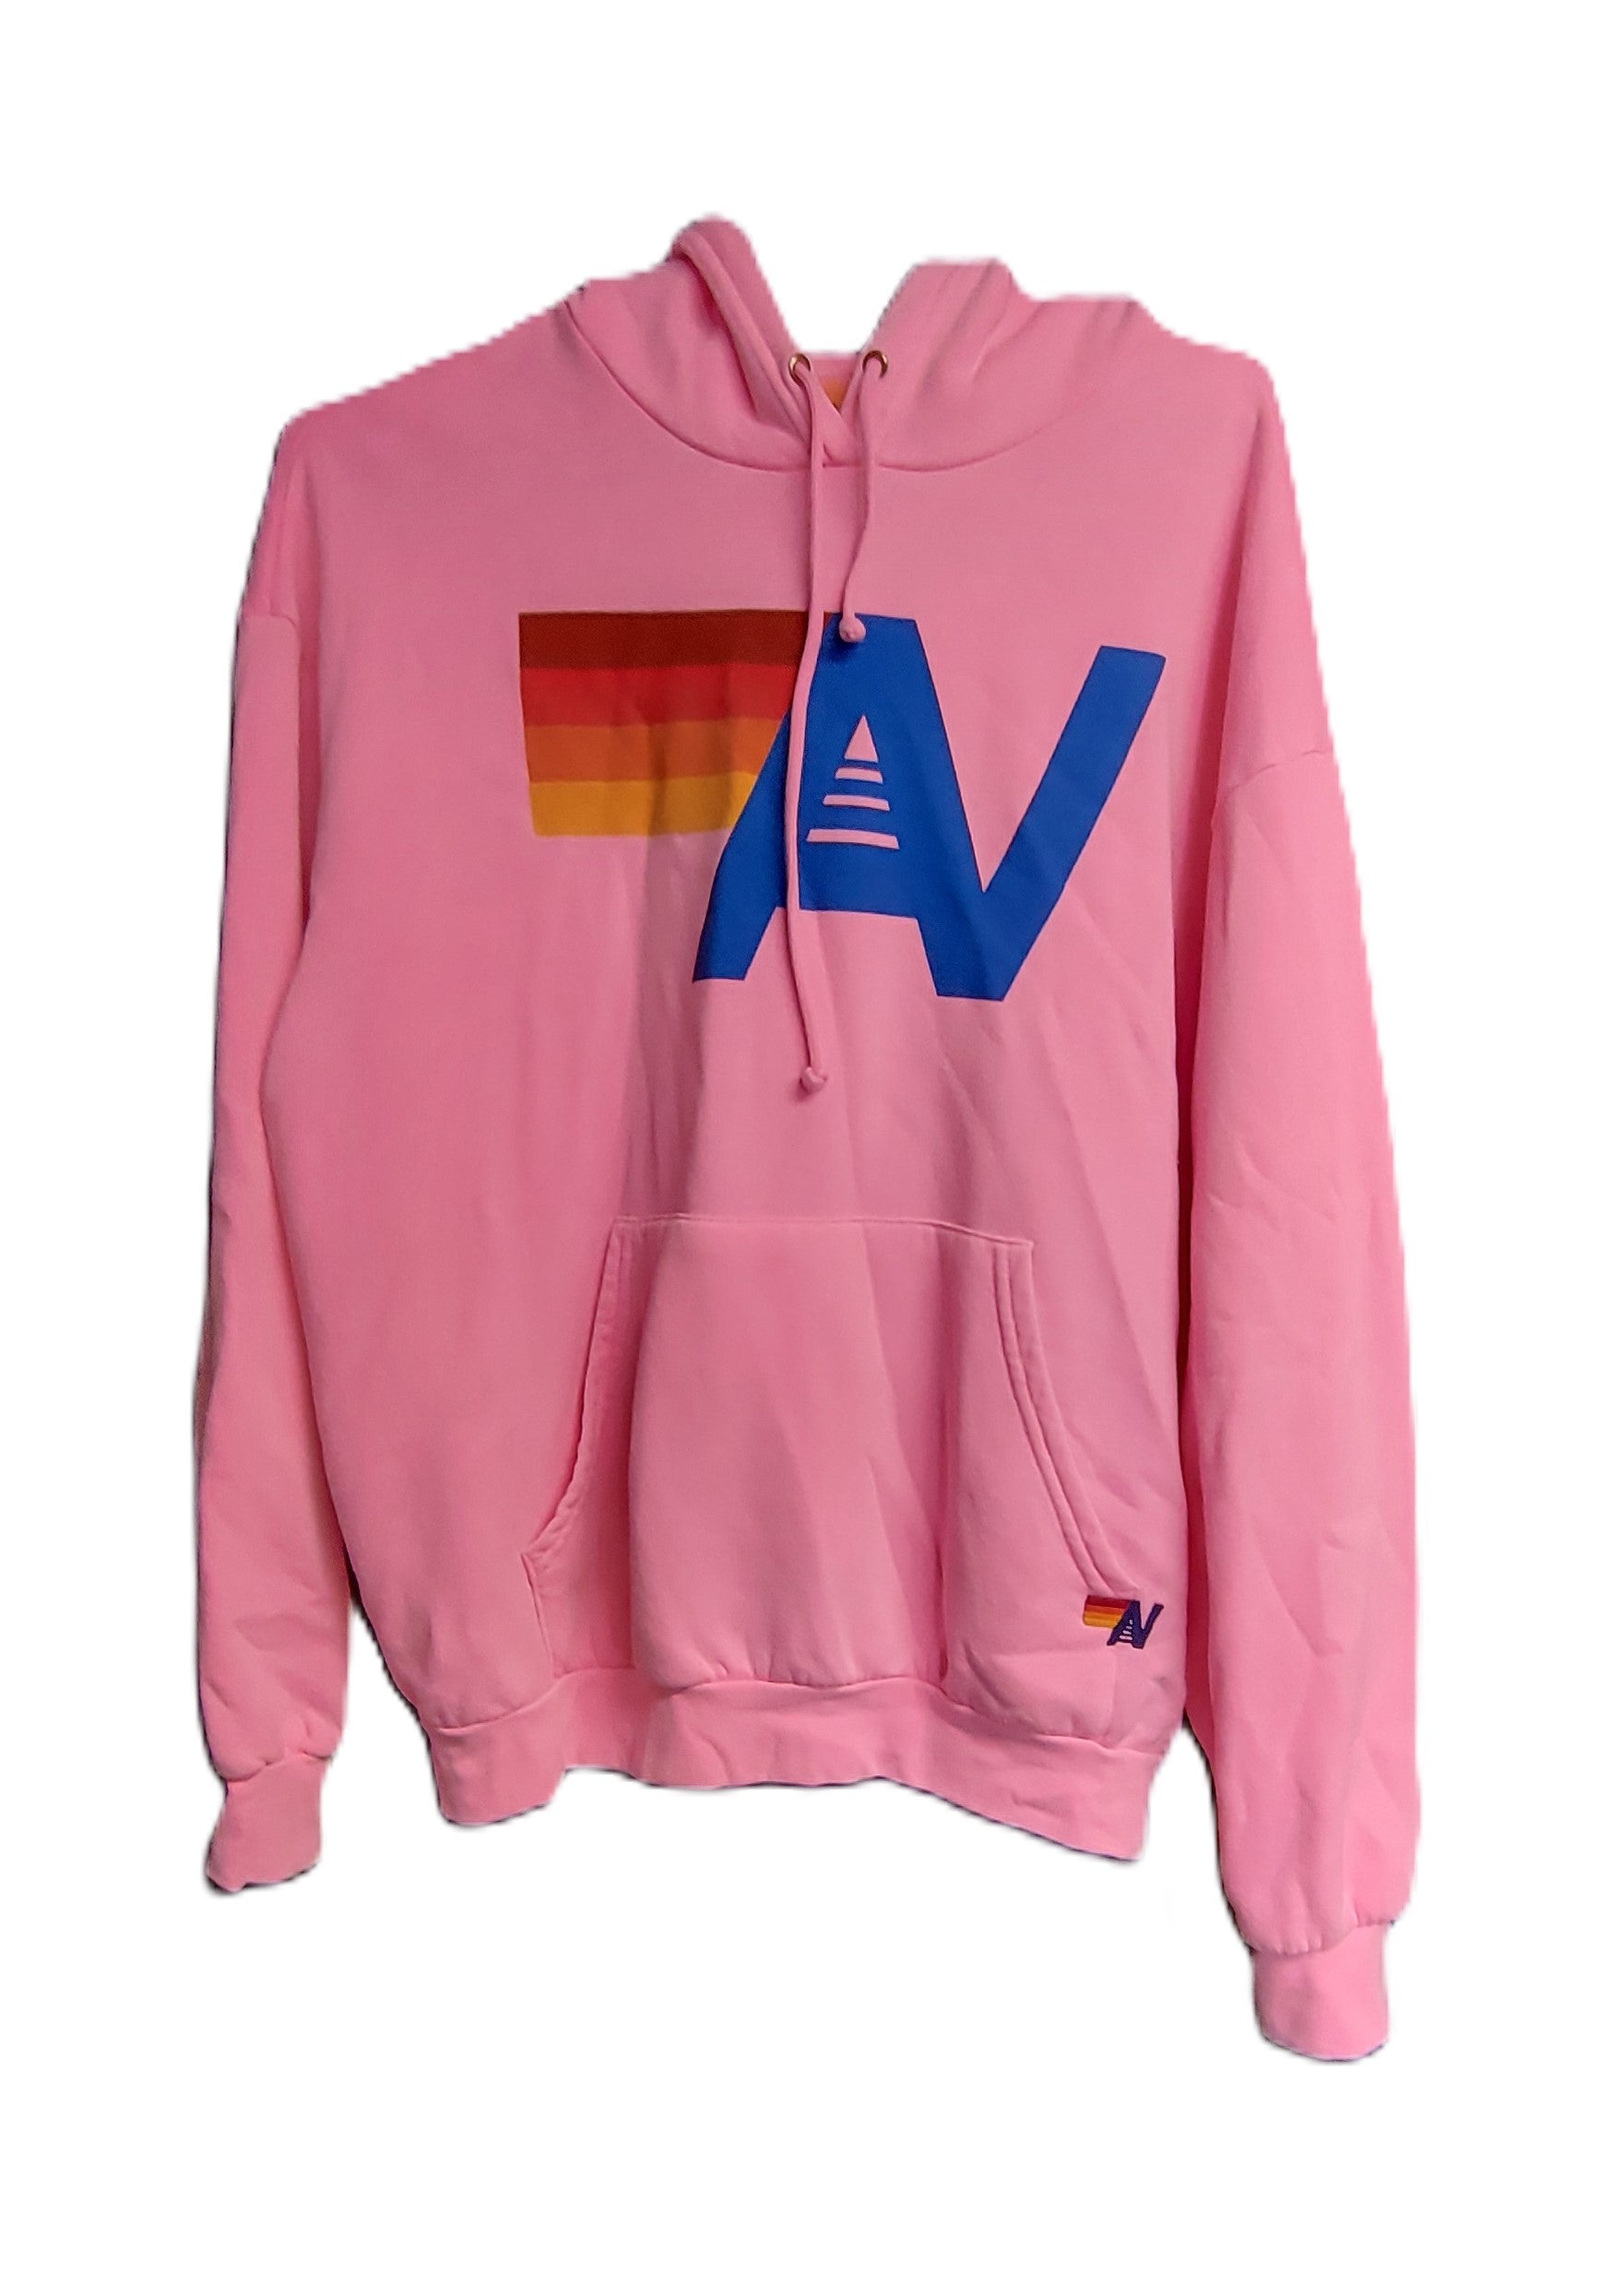 Aviator Nation Logo Pullover Hoodie in Neon Pink Size Medium